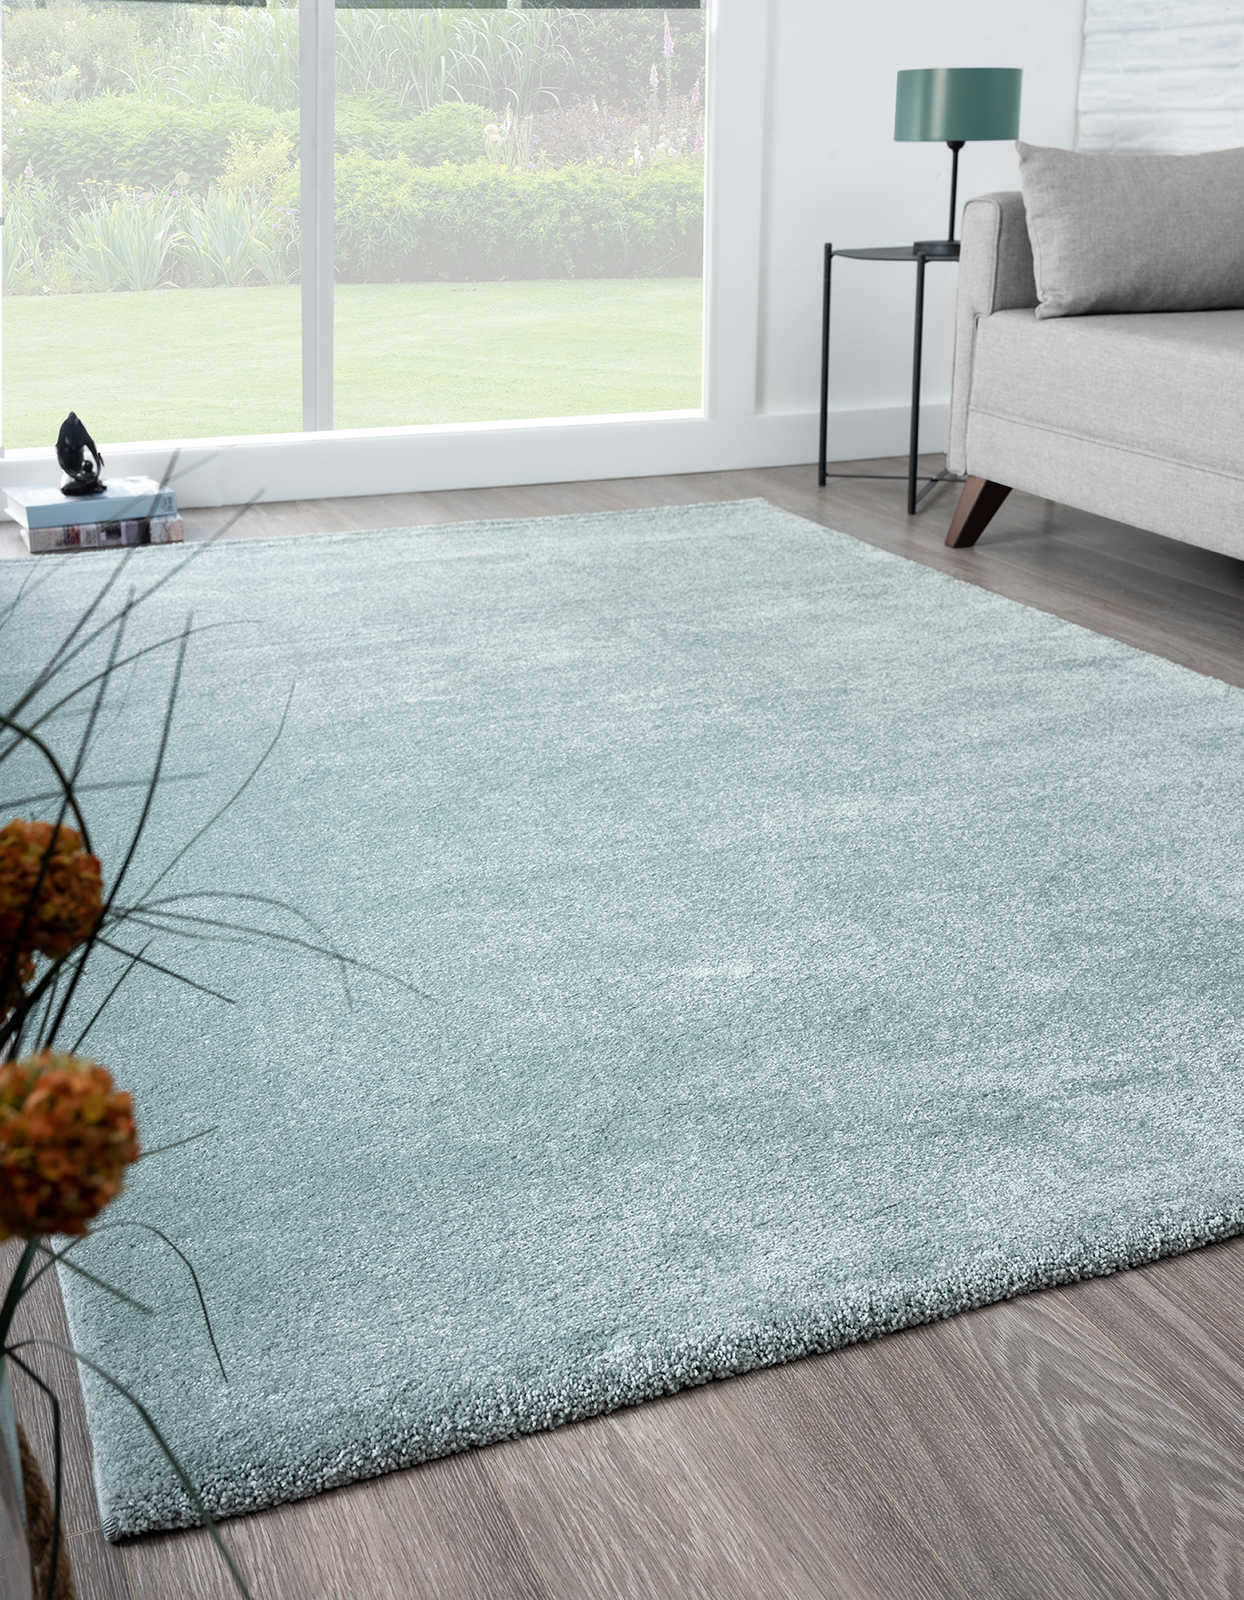 Simple short pile carpet in blue - 110 x 60 cm
